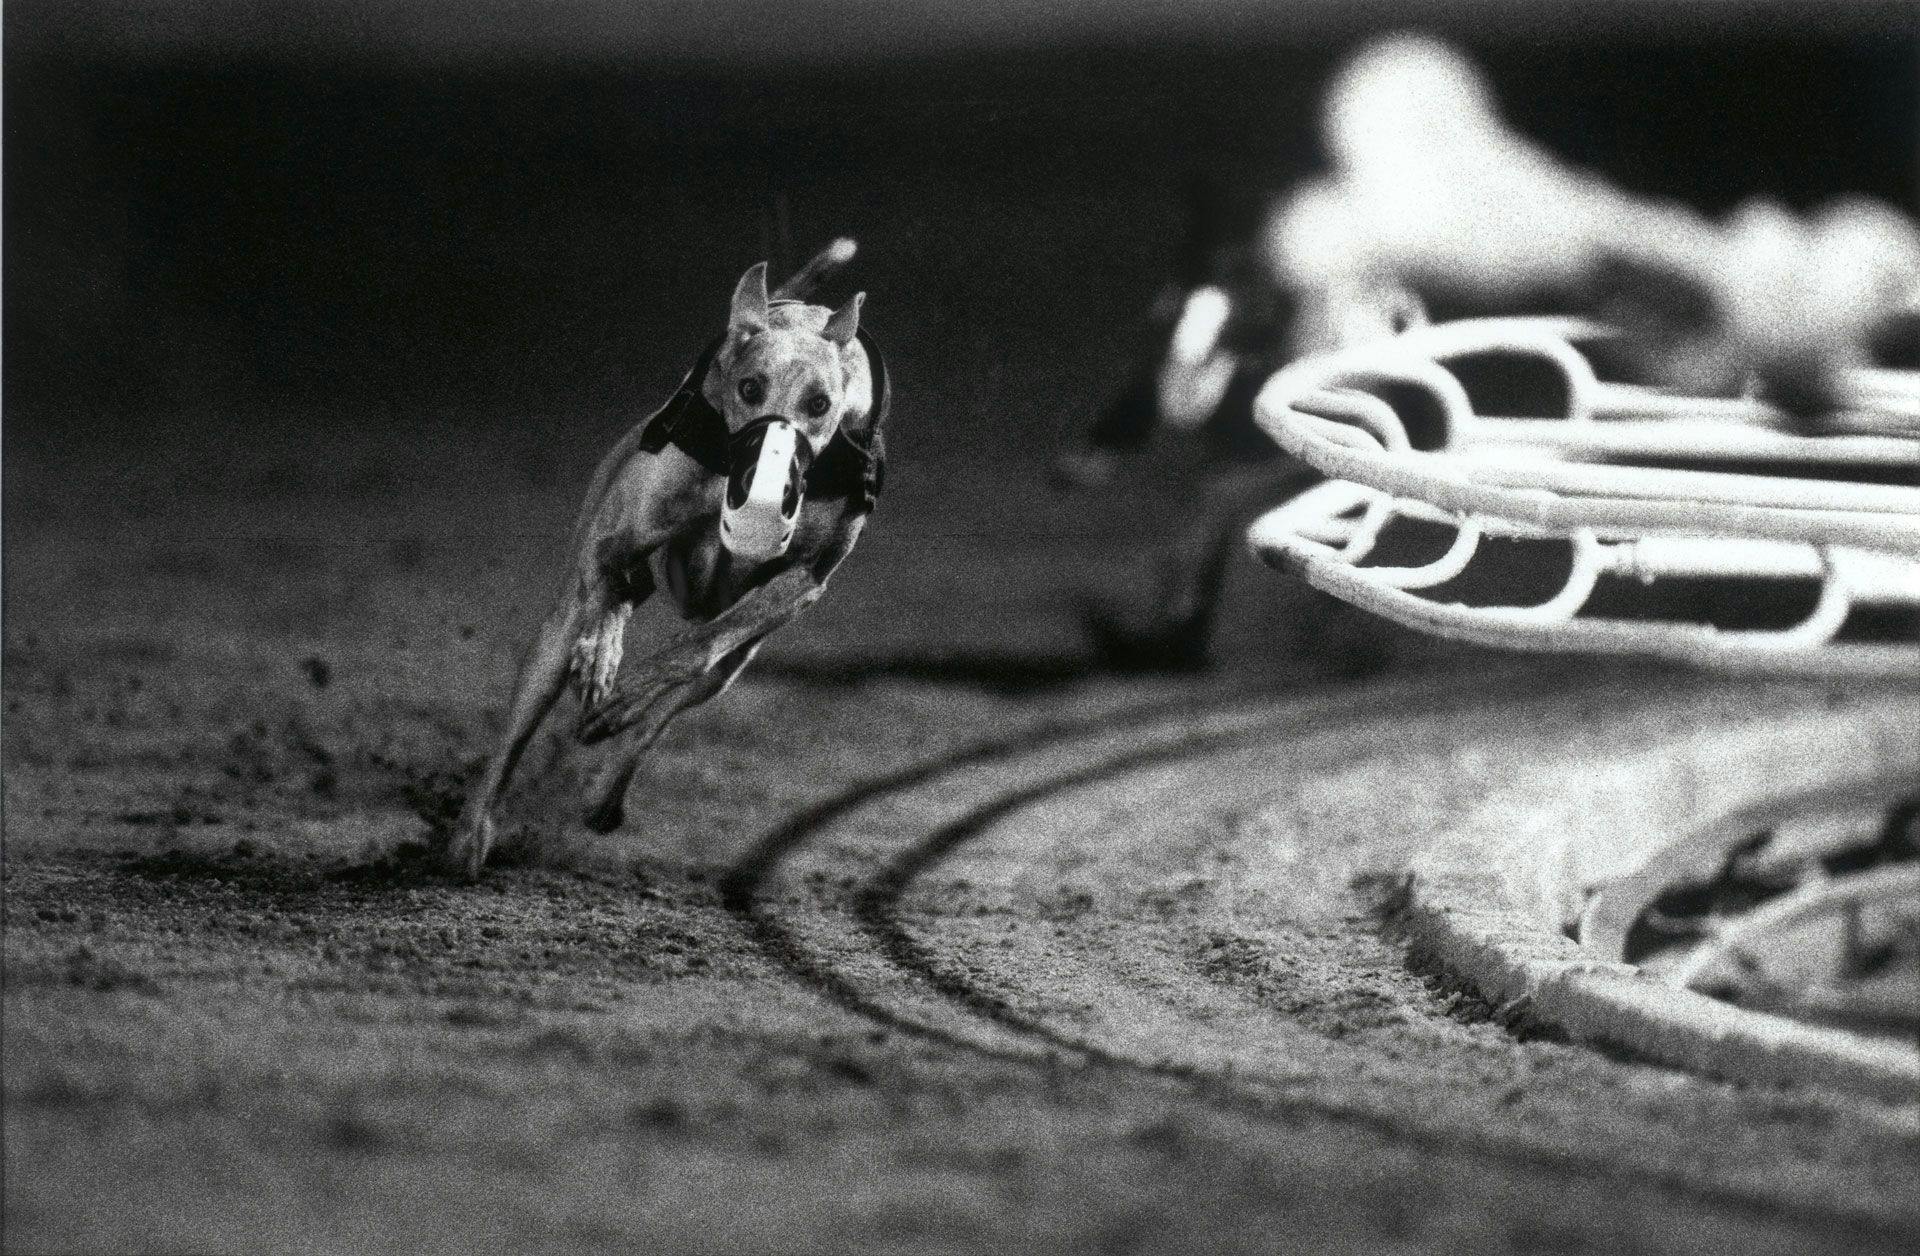 A photograph by Christopher Williams titled 3 White (DG‚Äôs Mr. Postman) Fourth Race, Phoenix Greyhound Park, Phoenix, Arizona, August 22, 1994, dated 1994.